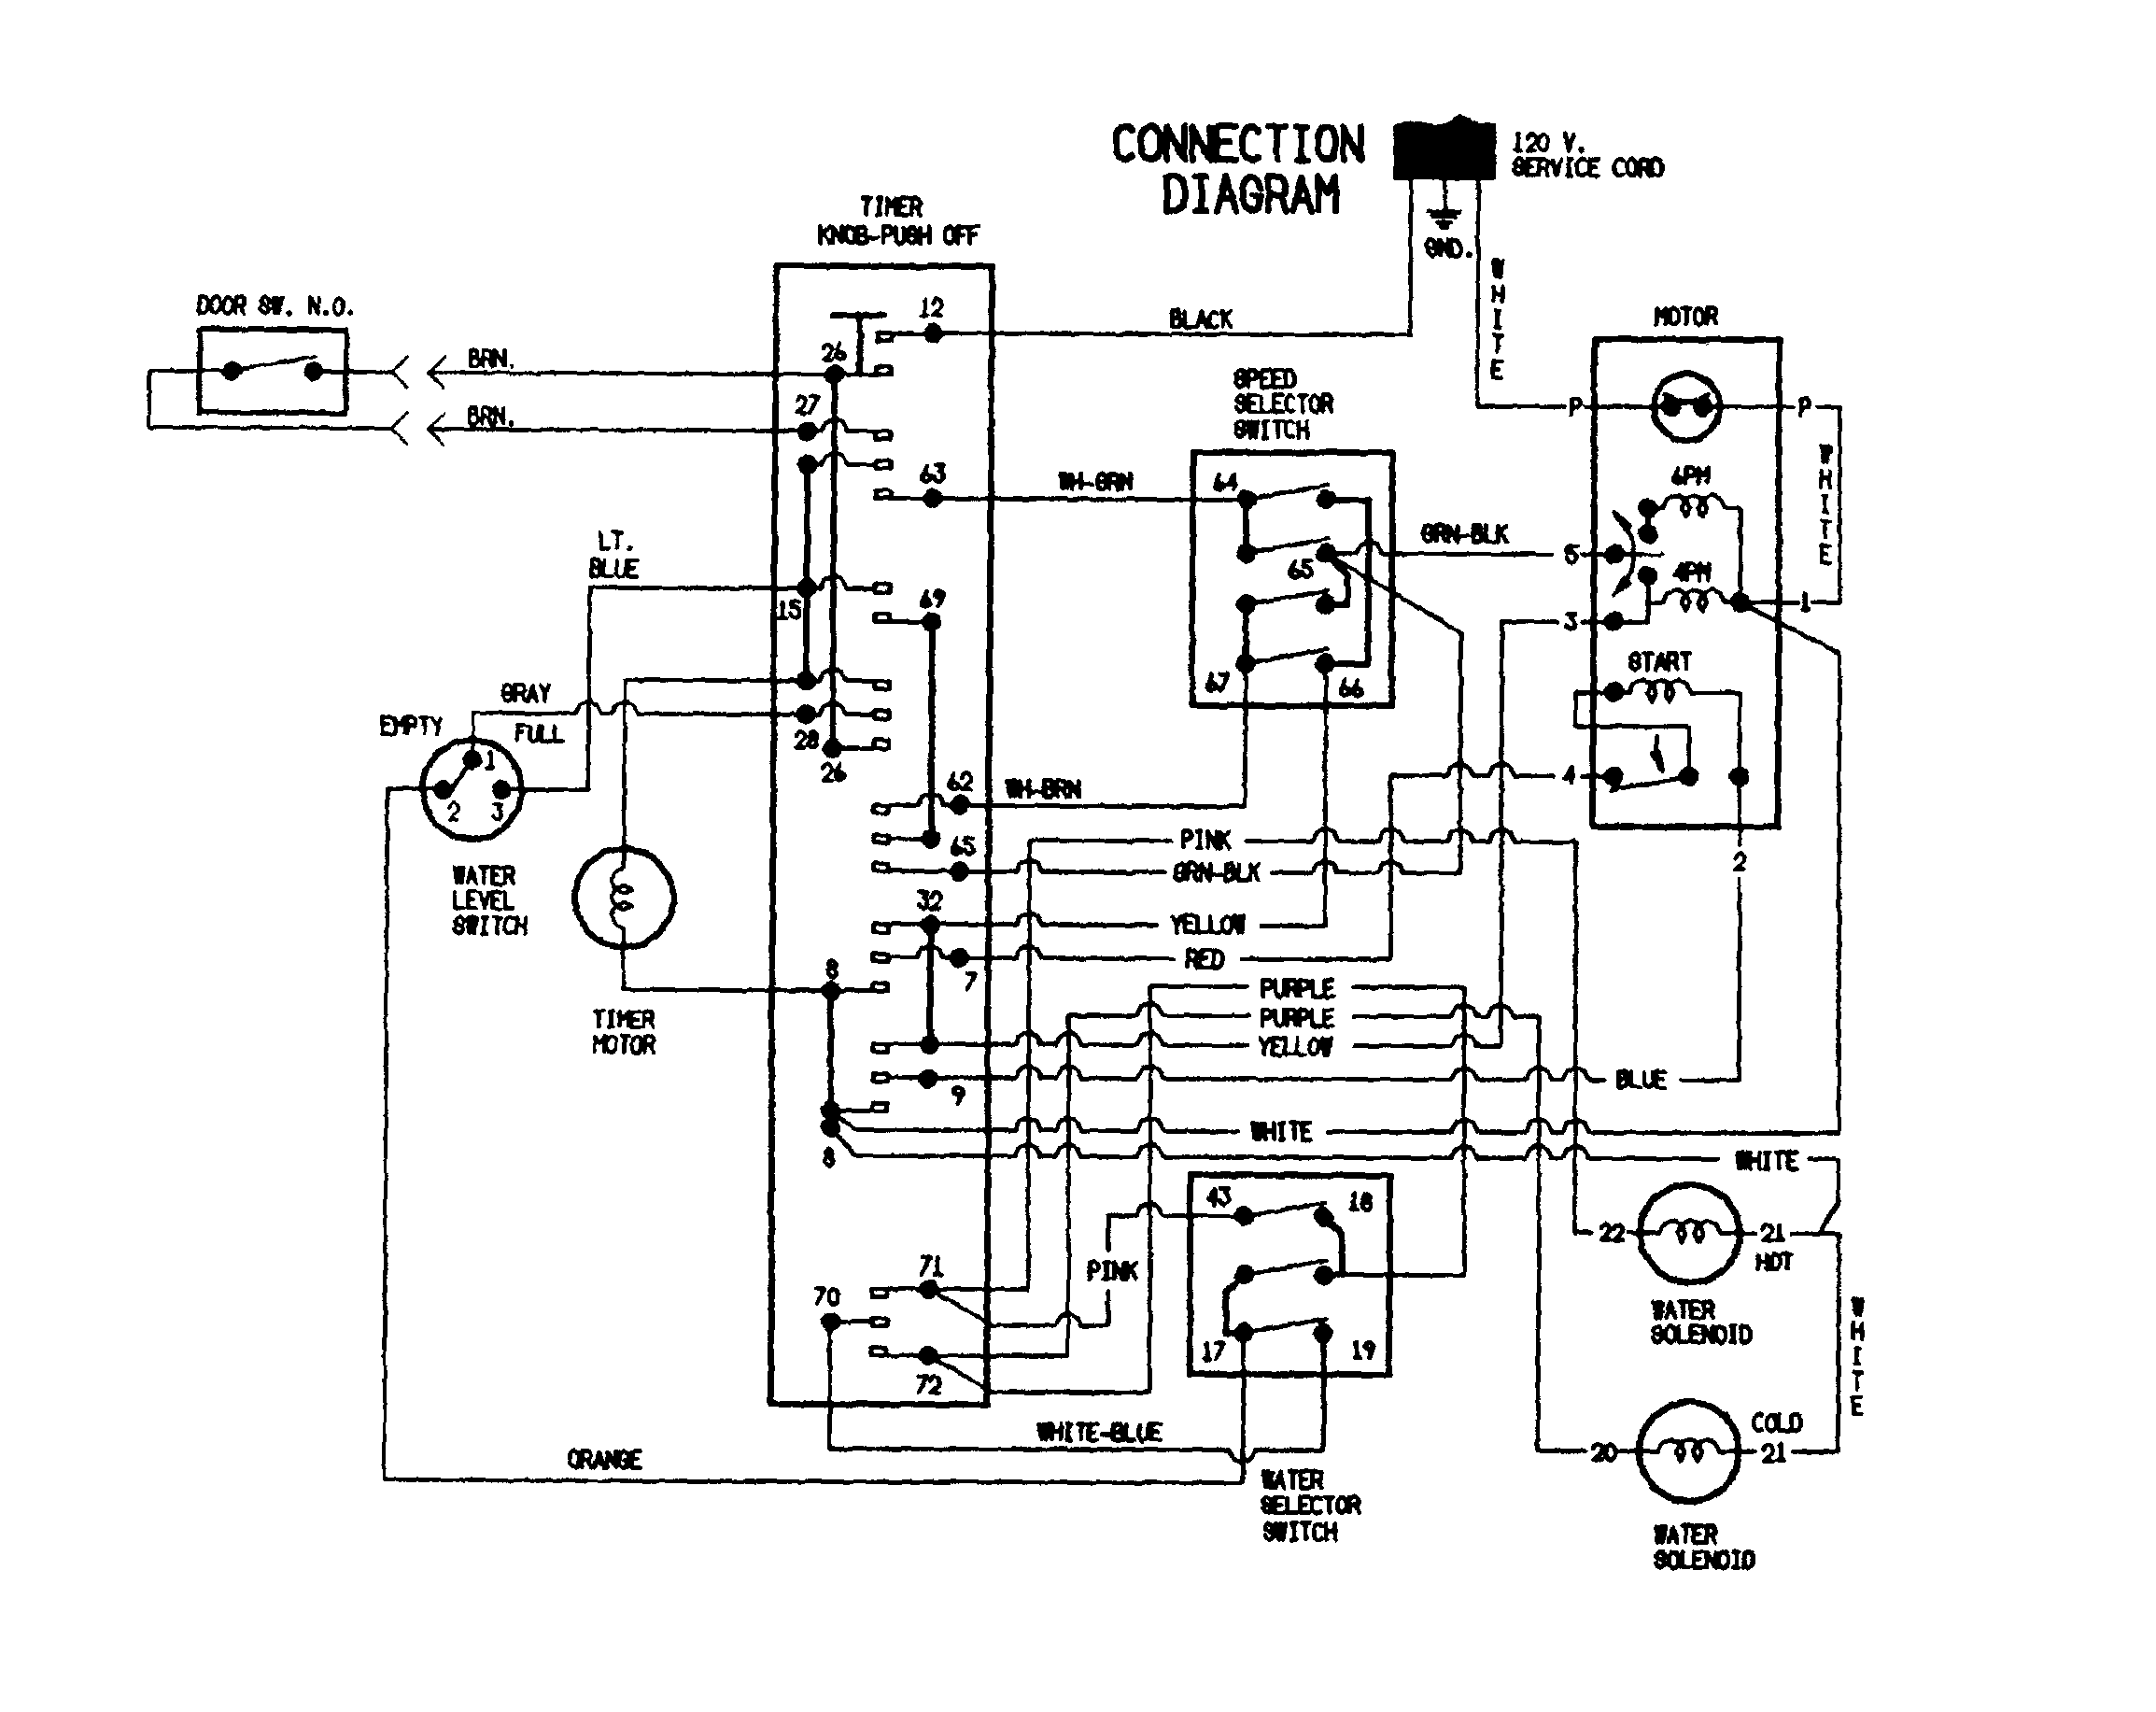 [DIAGRAM] Vulcan Oven Wiring Diagram FULL Version HD Quality Wiring